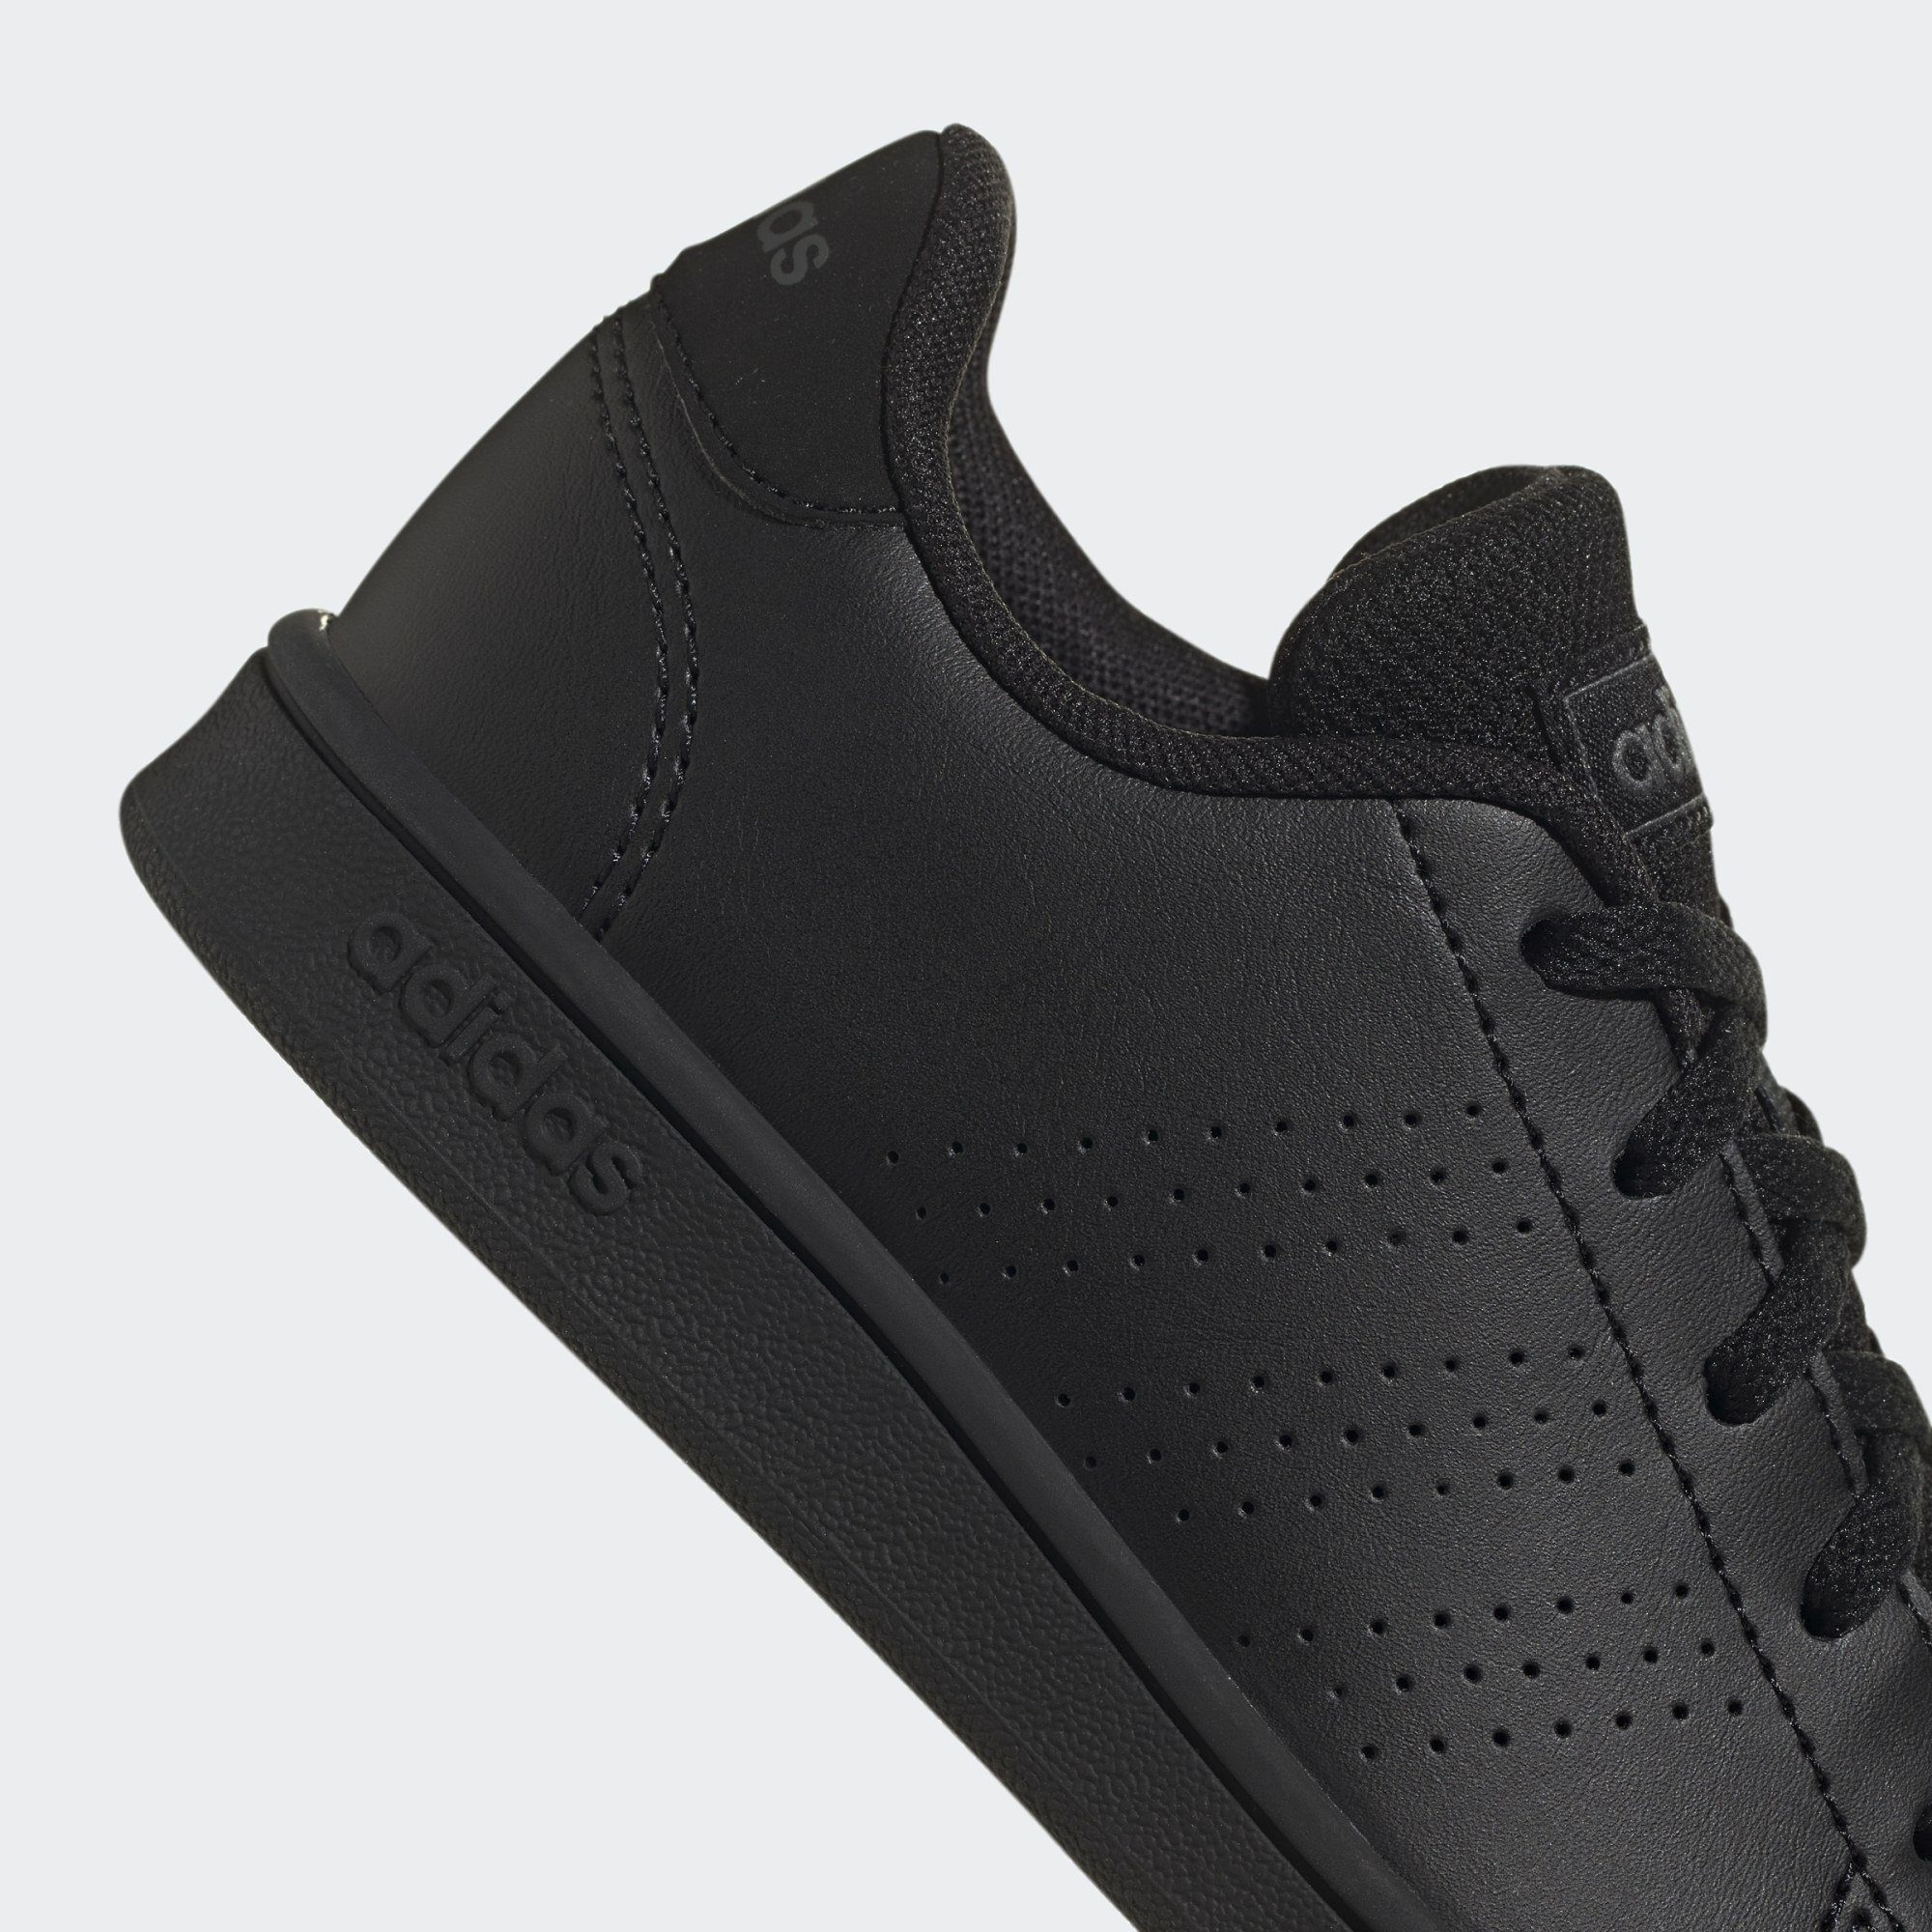 / LACE Grey Sneaker LIFESTYLE / Six Black Black adidas ADVANTAGE Core Core Sportswear SCHUH COURT